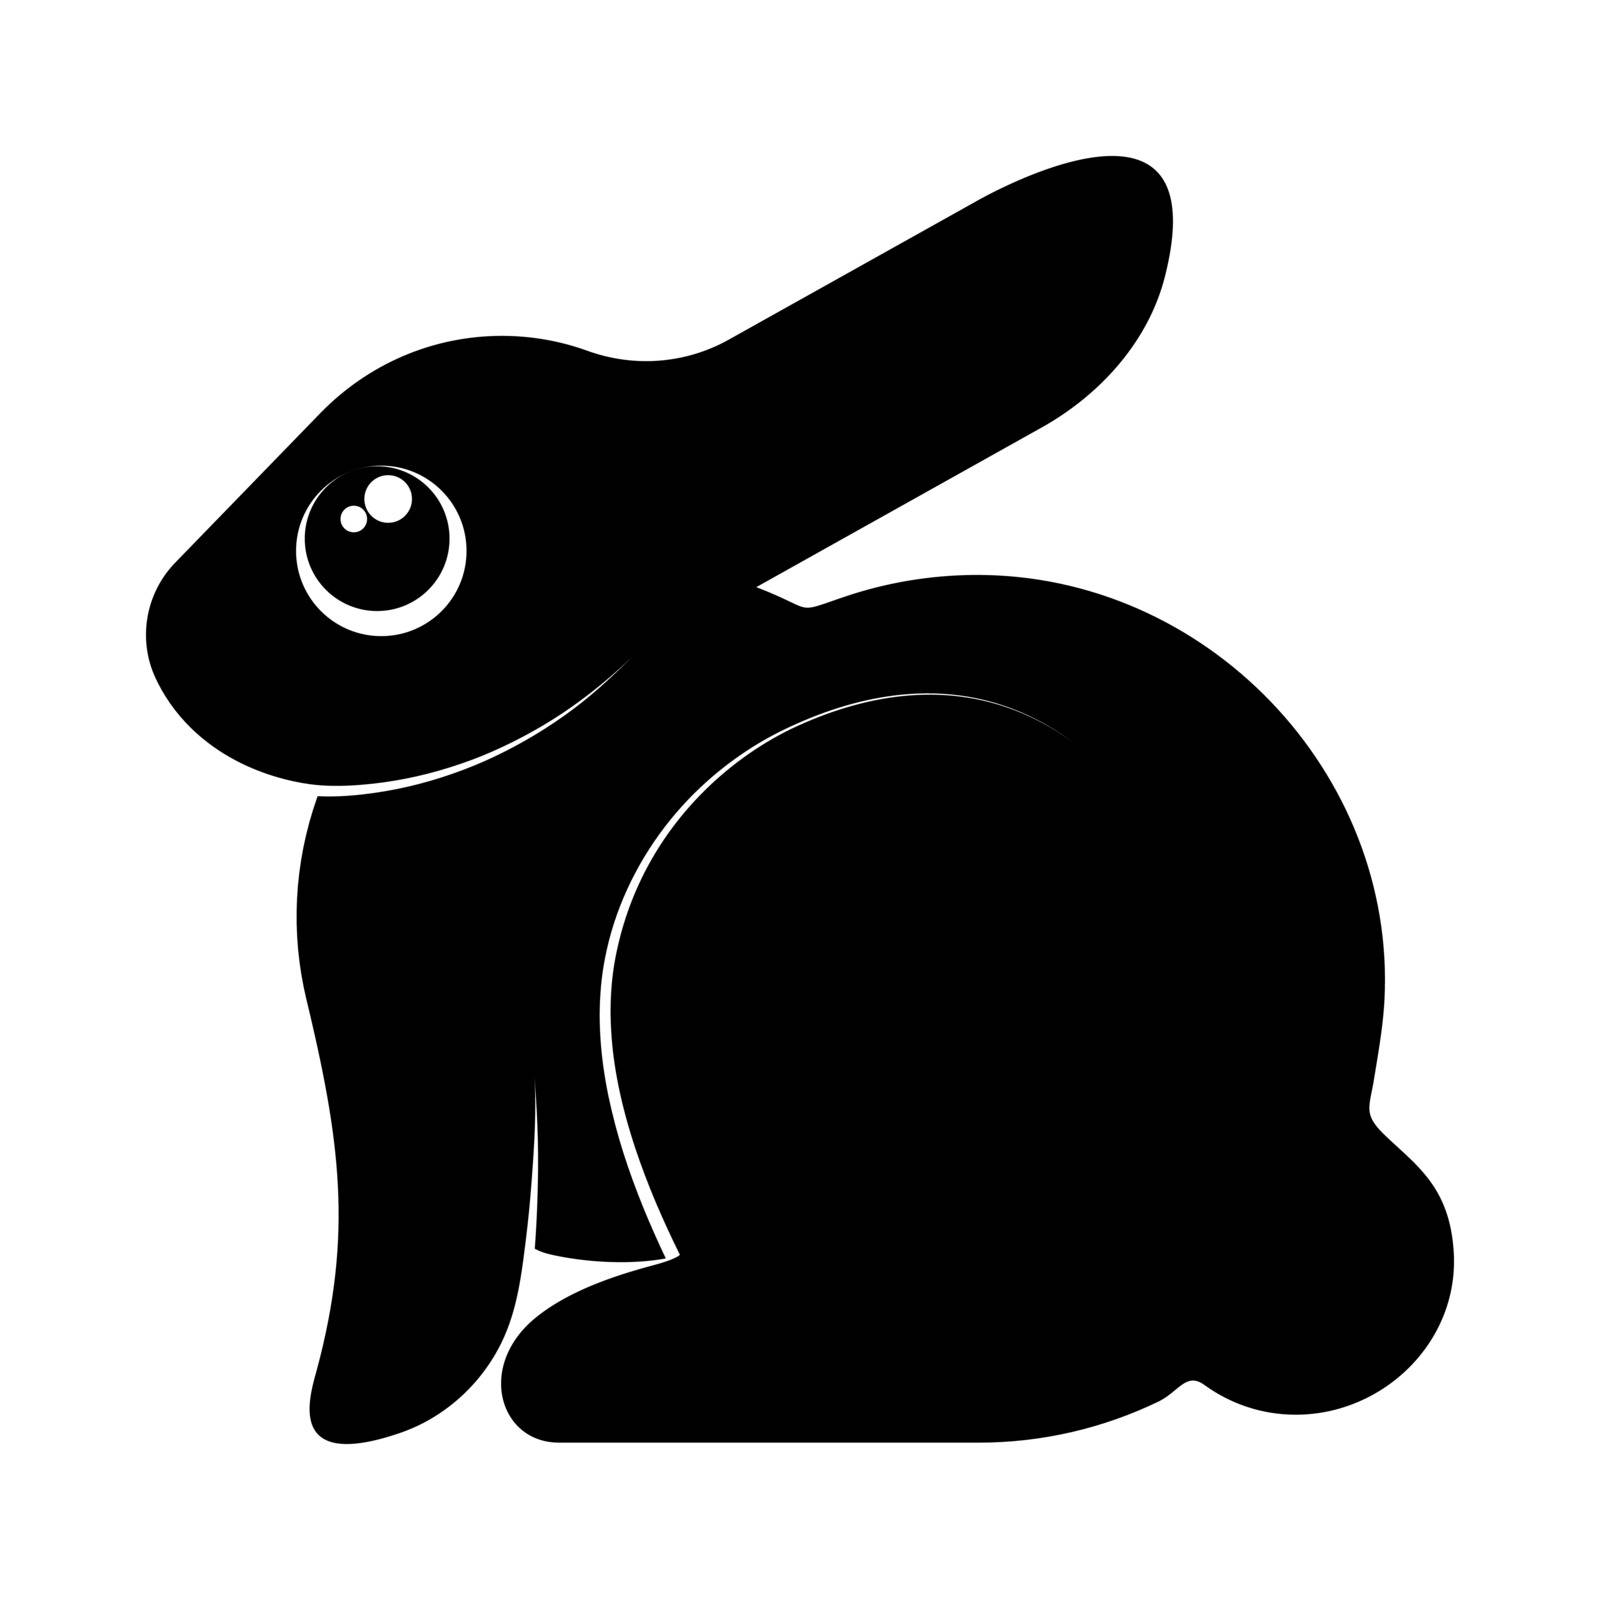 Black rabbit silhouette isolated on white background. Vector illustration. Logo.